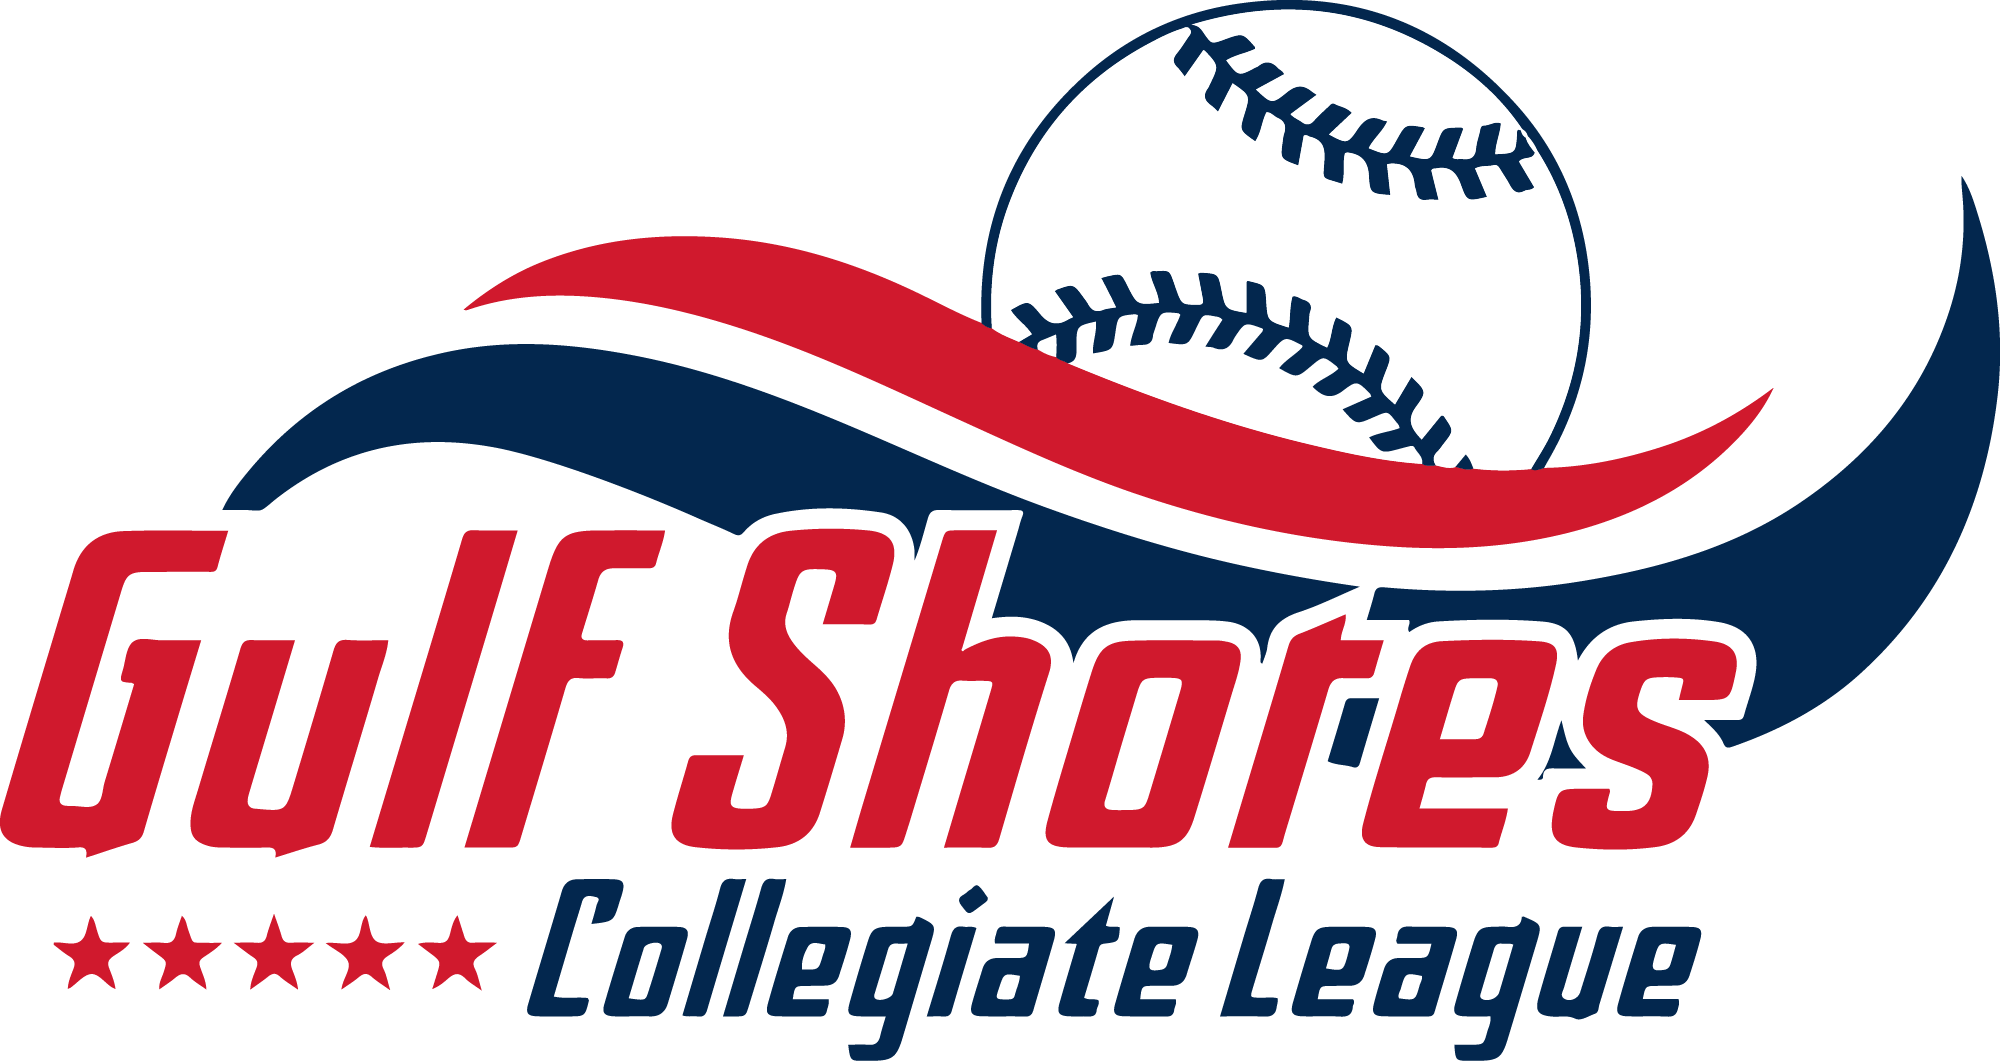 Gulf Shores Collegiate Baseball League